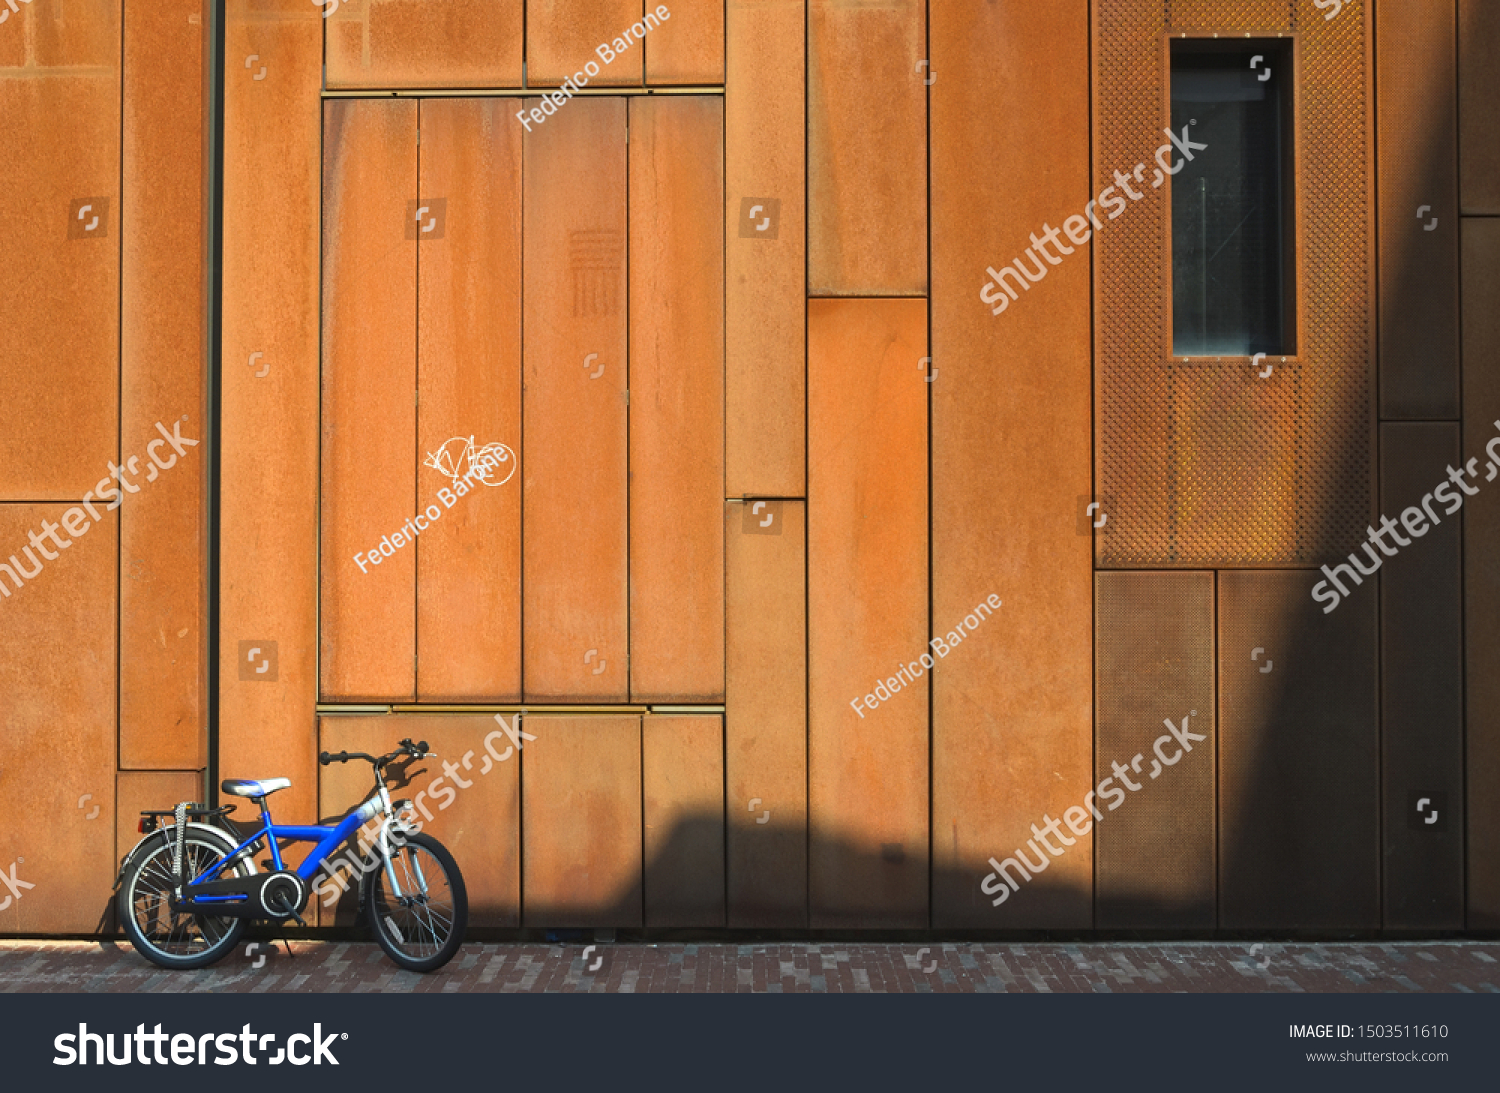 stock-photo-sunny-rusty-facade-of-an-urb